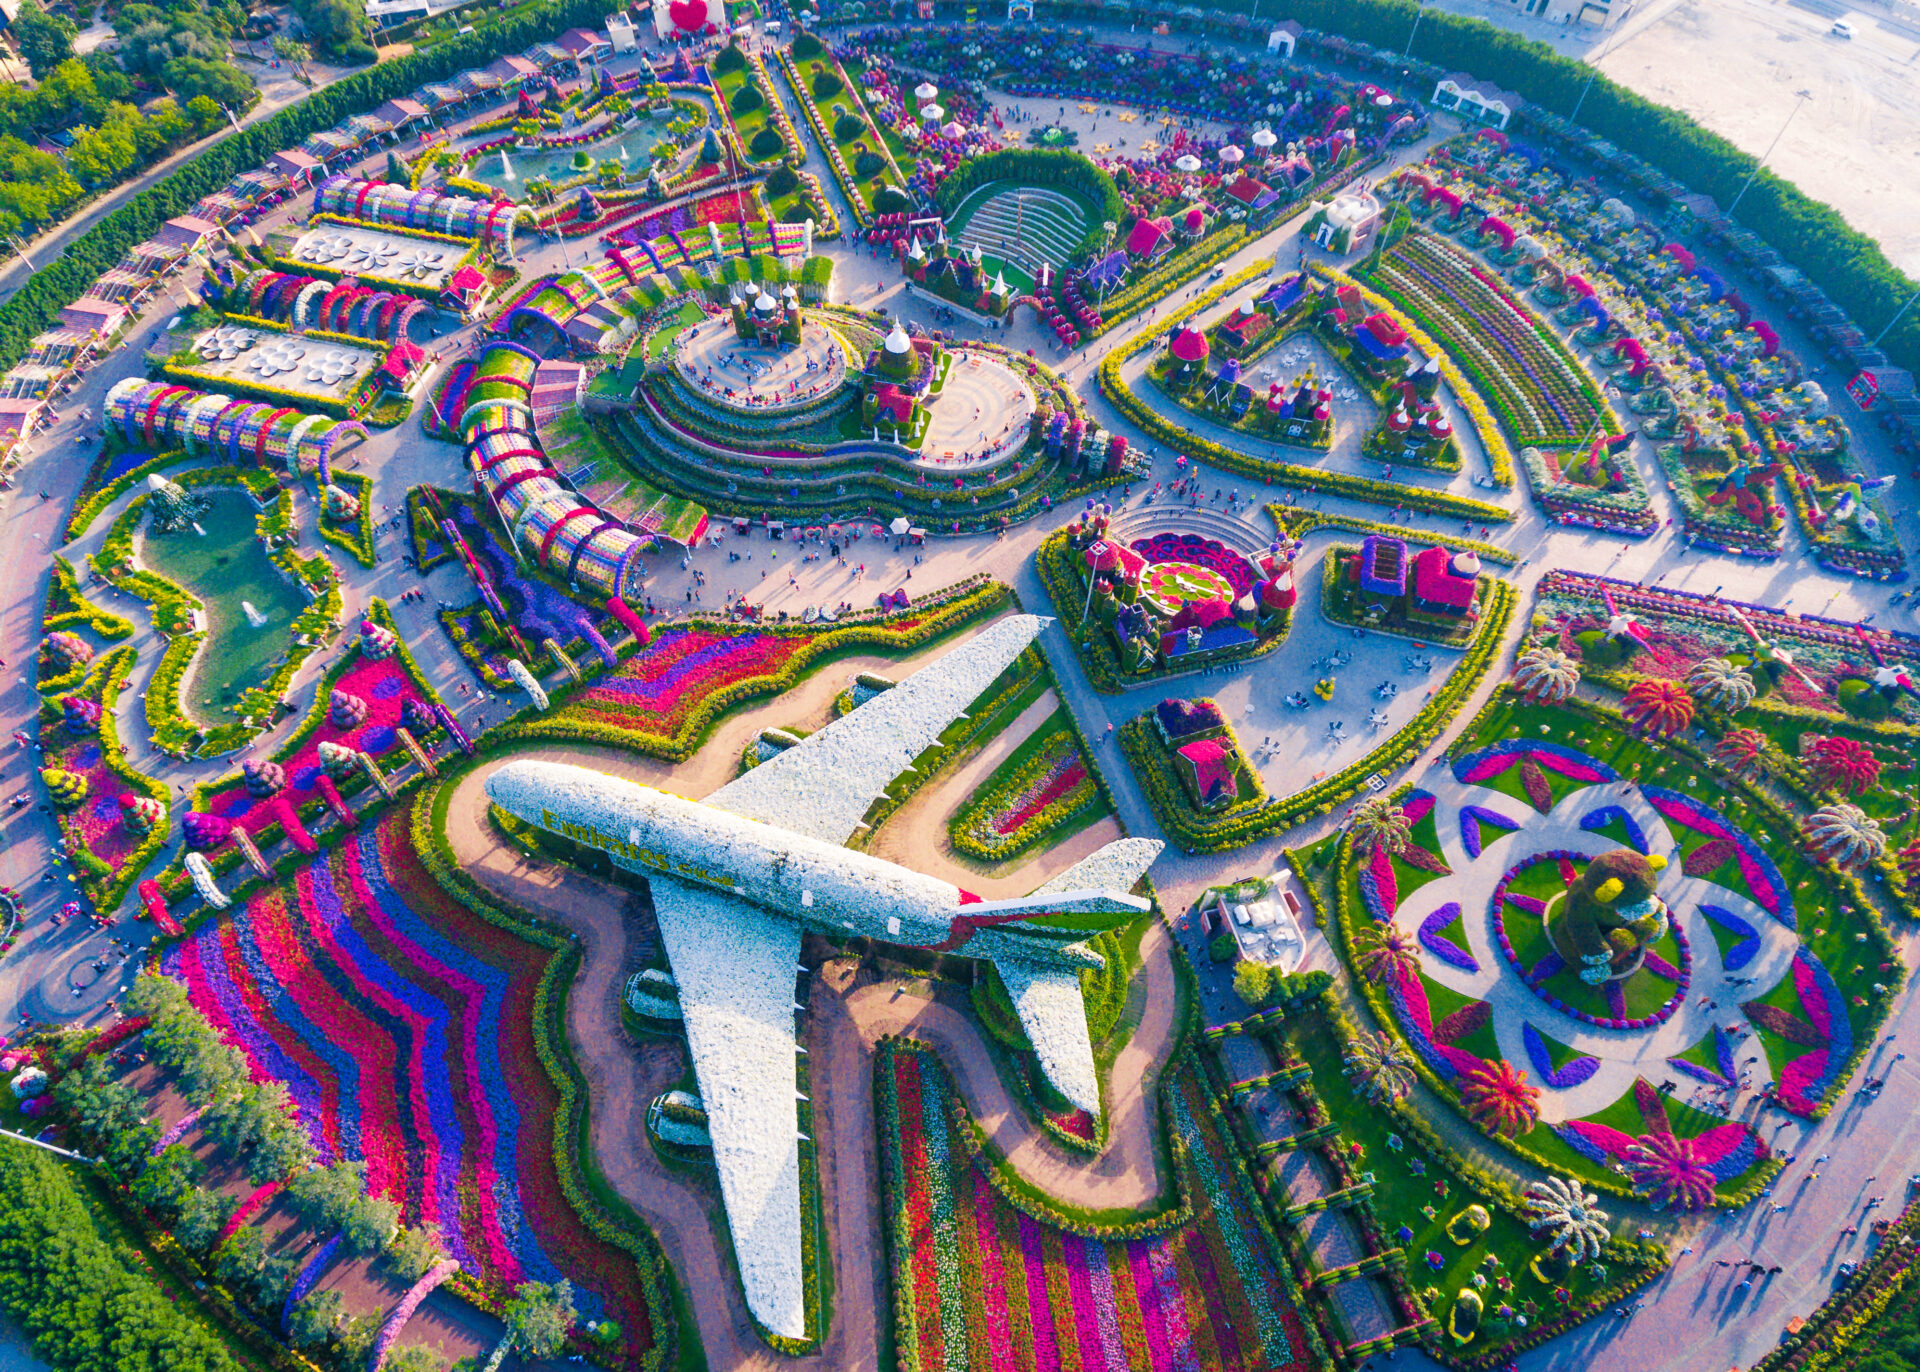 Dubai Miracle Garden - Dubai flower park overview